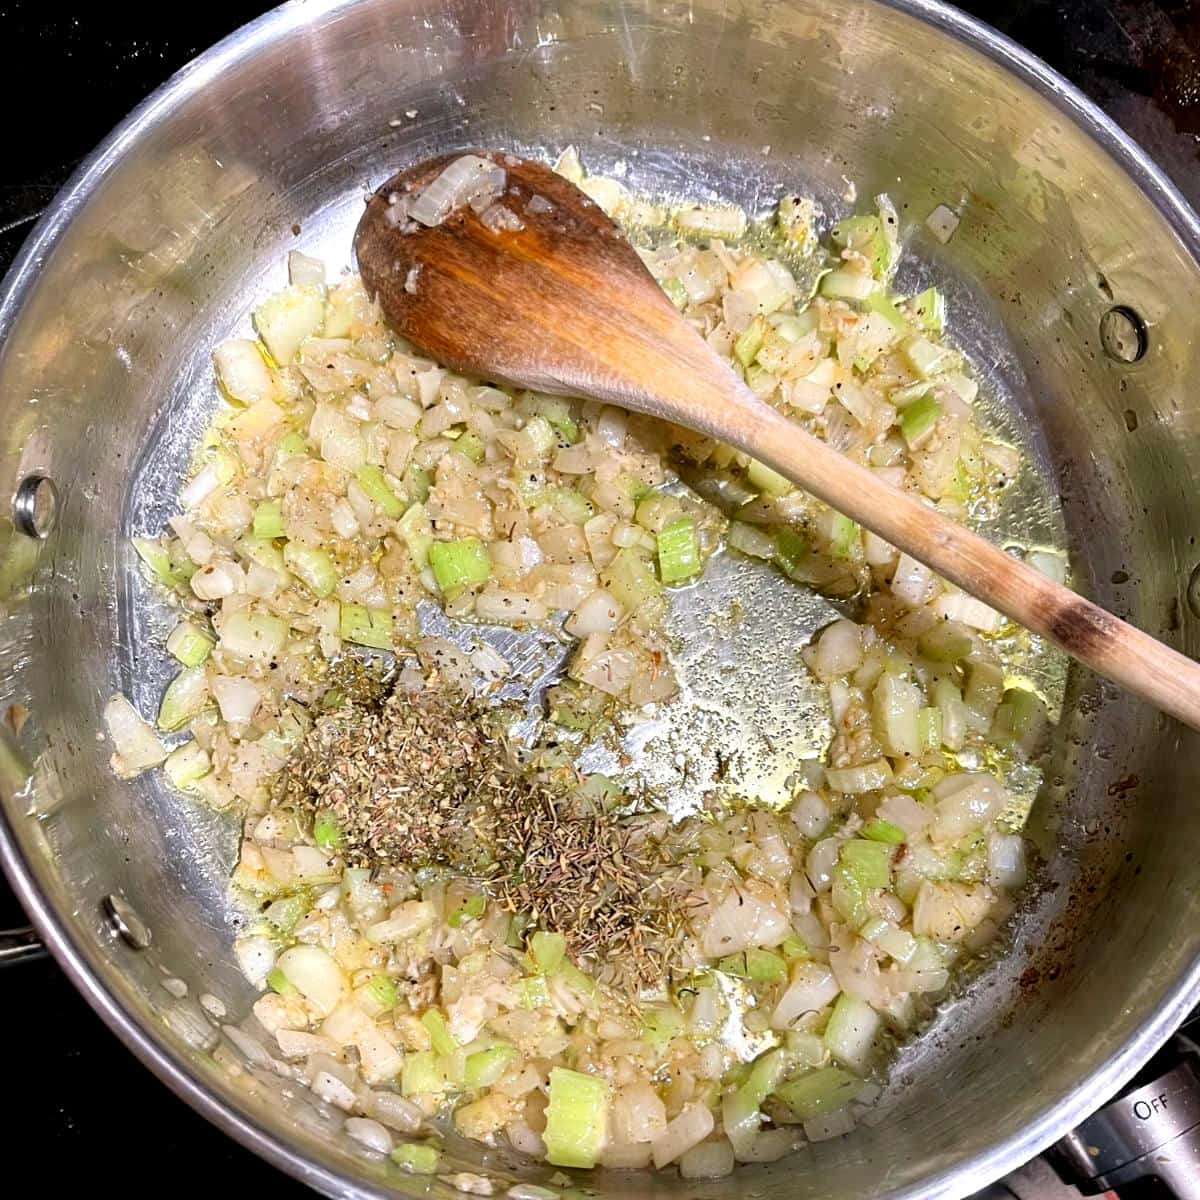 Thyme and oregano added to veggies in saucepan.